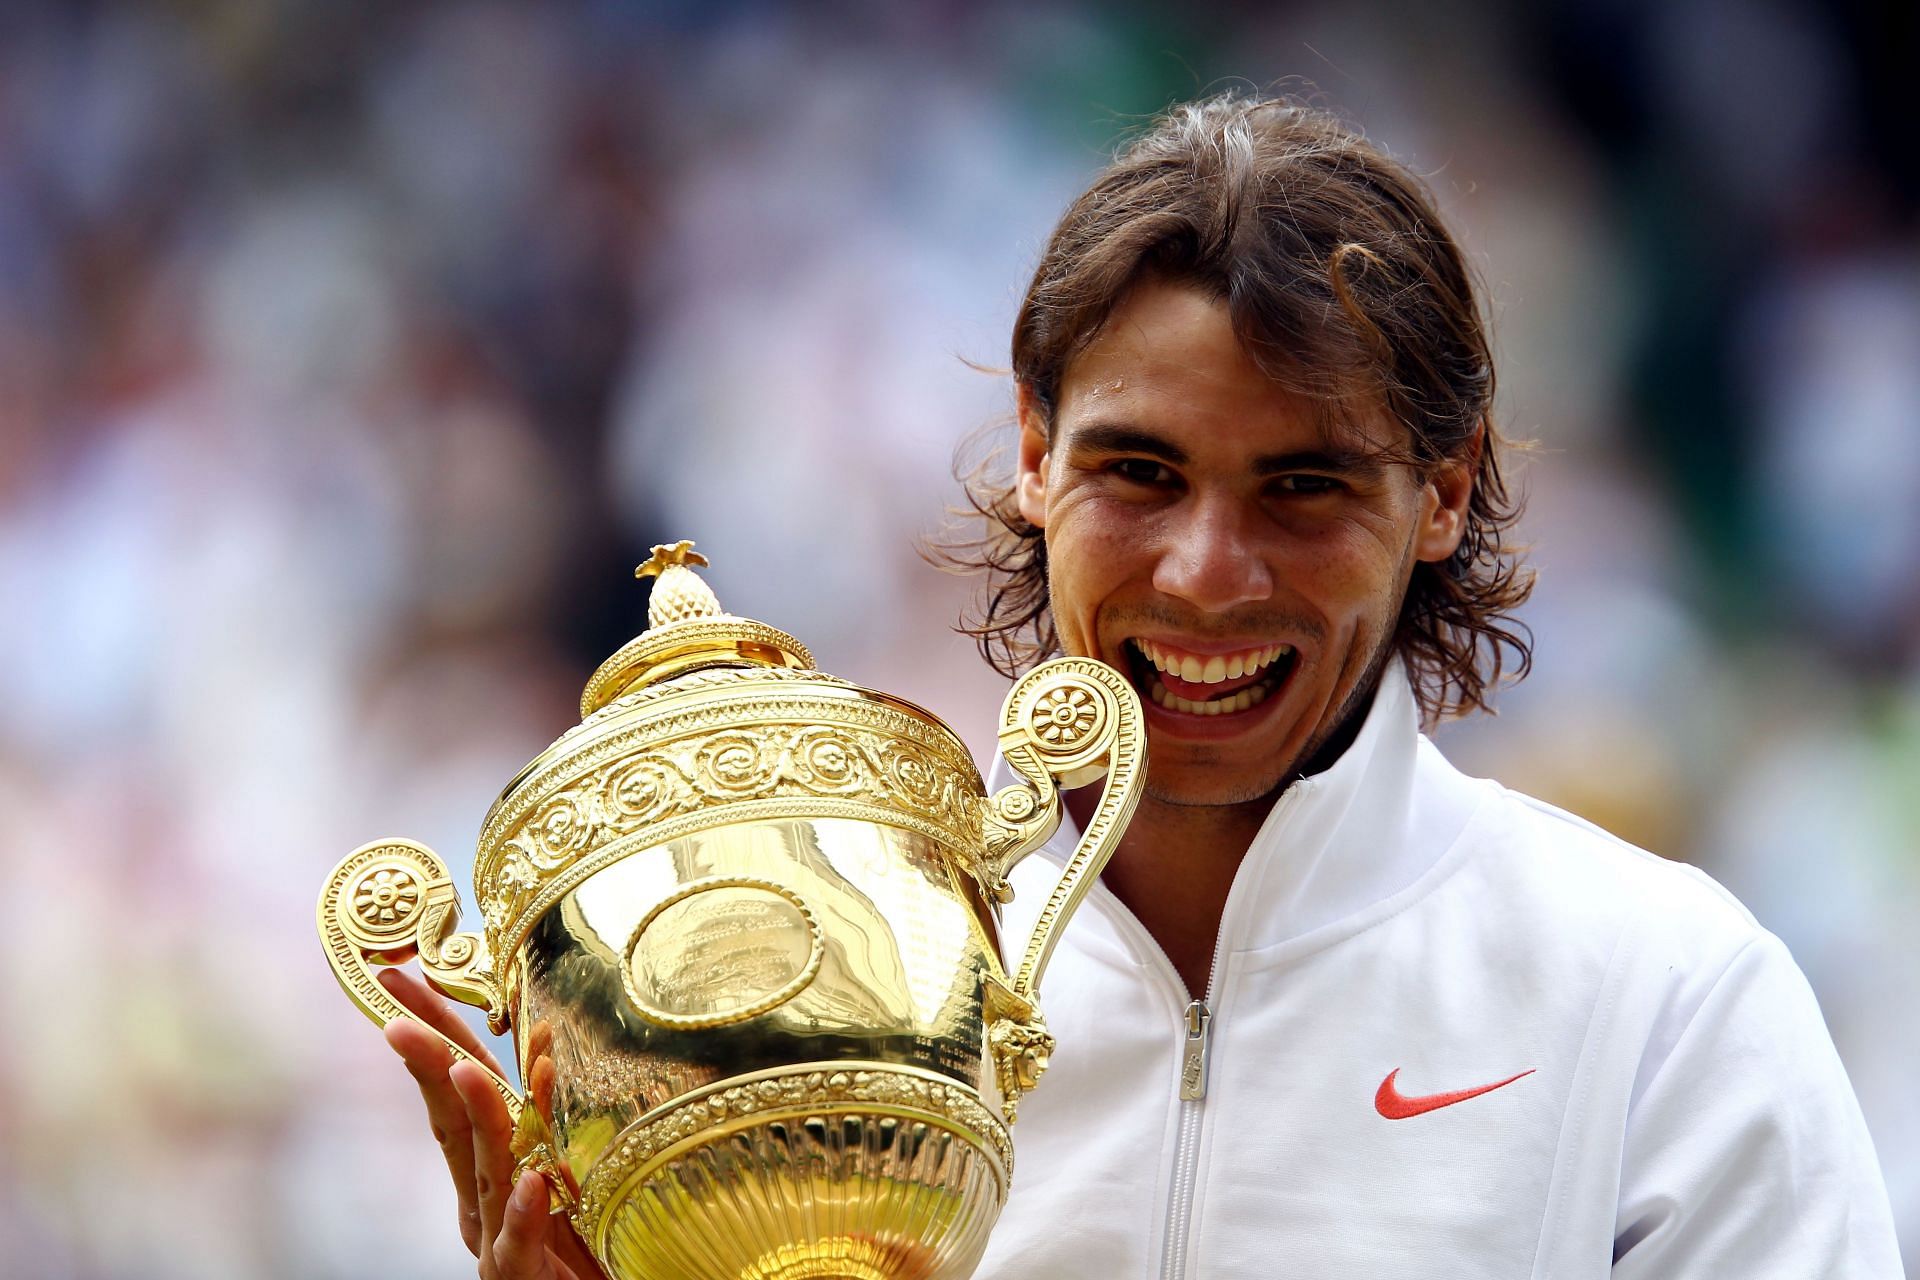 Rafael Nadal has won two titles at the grasscourt major.